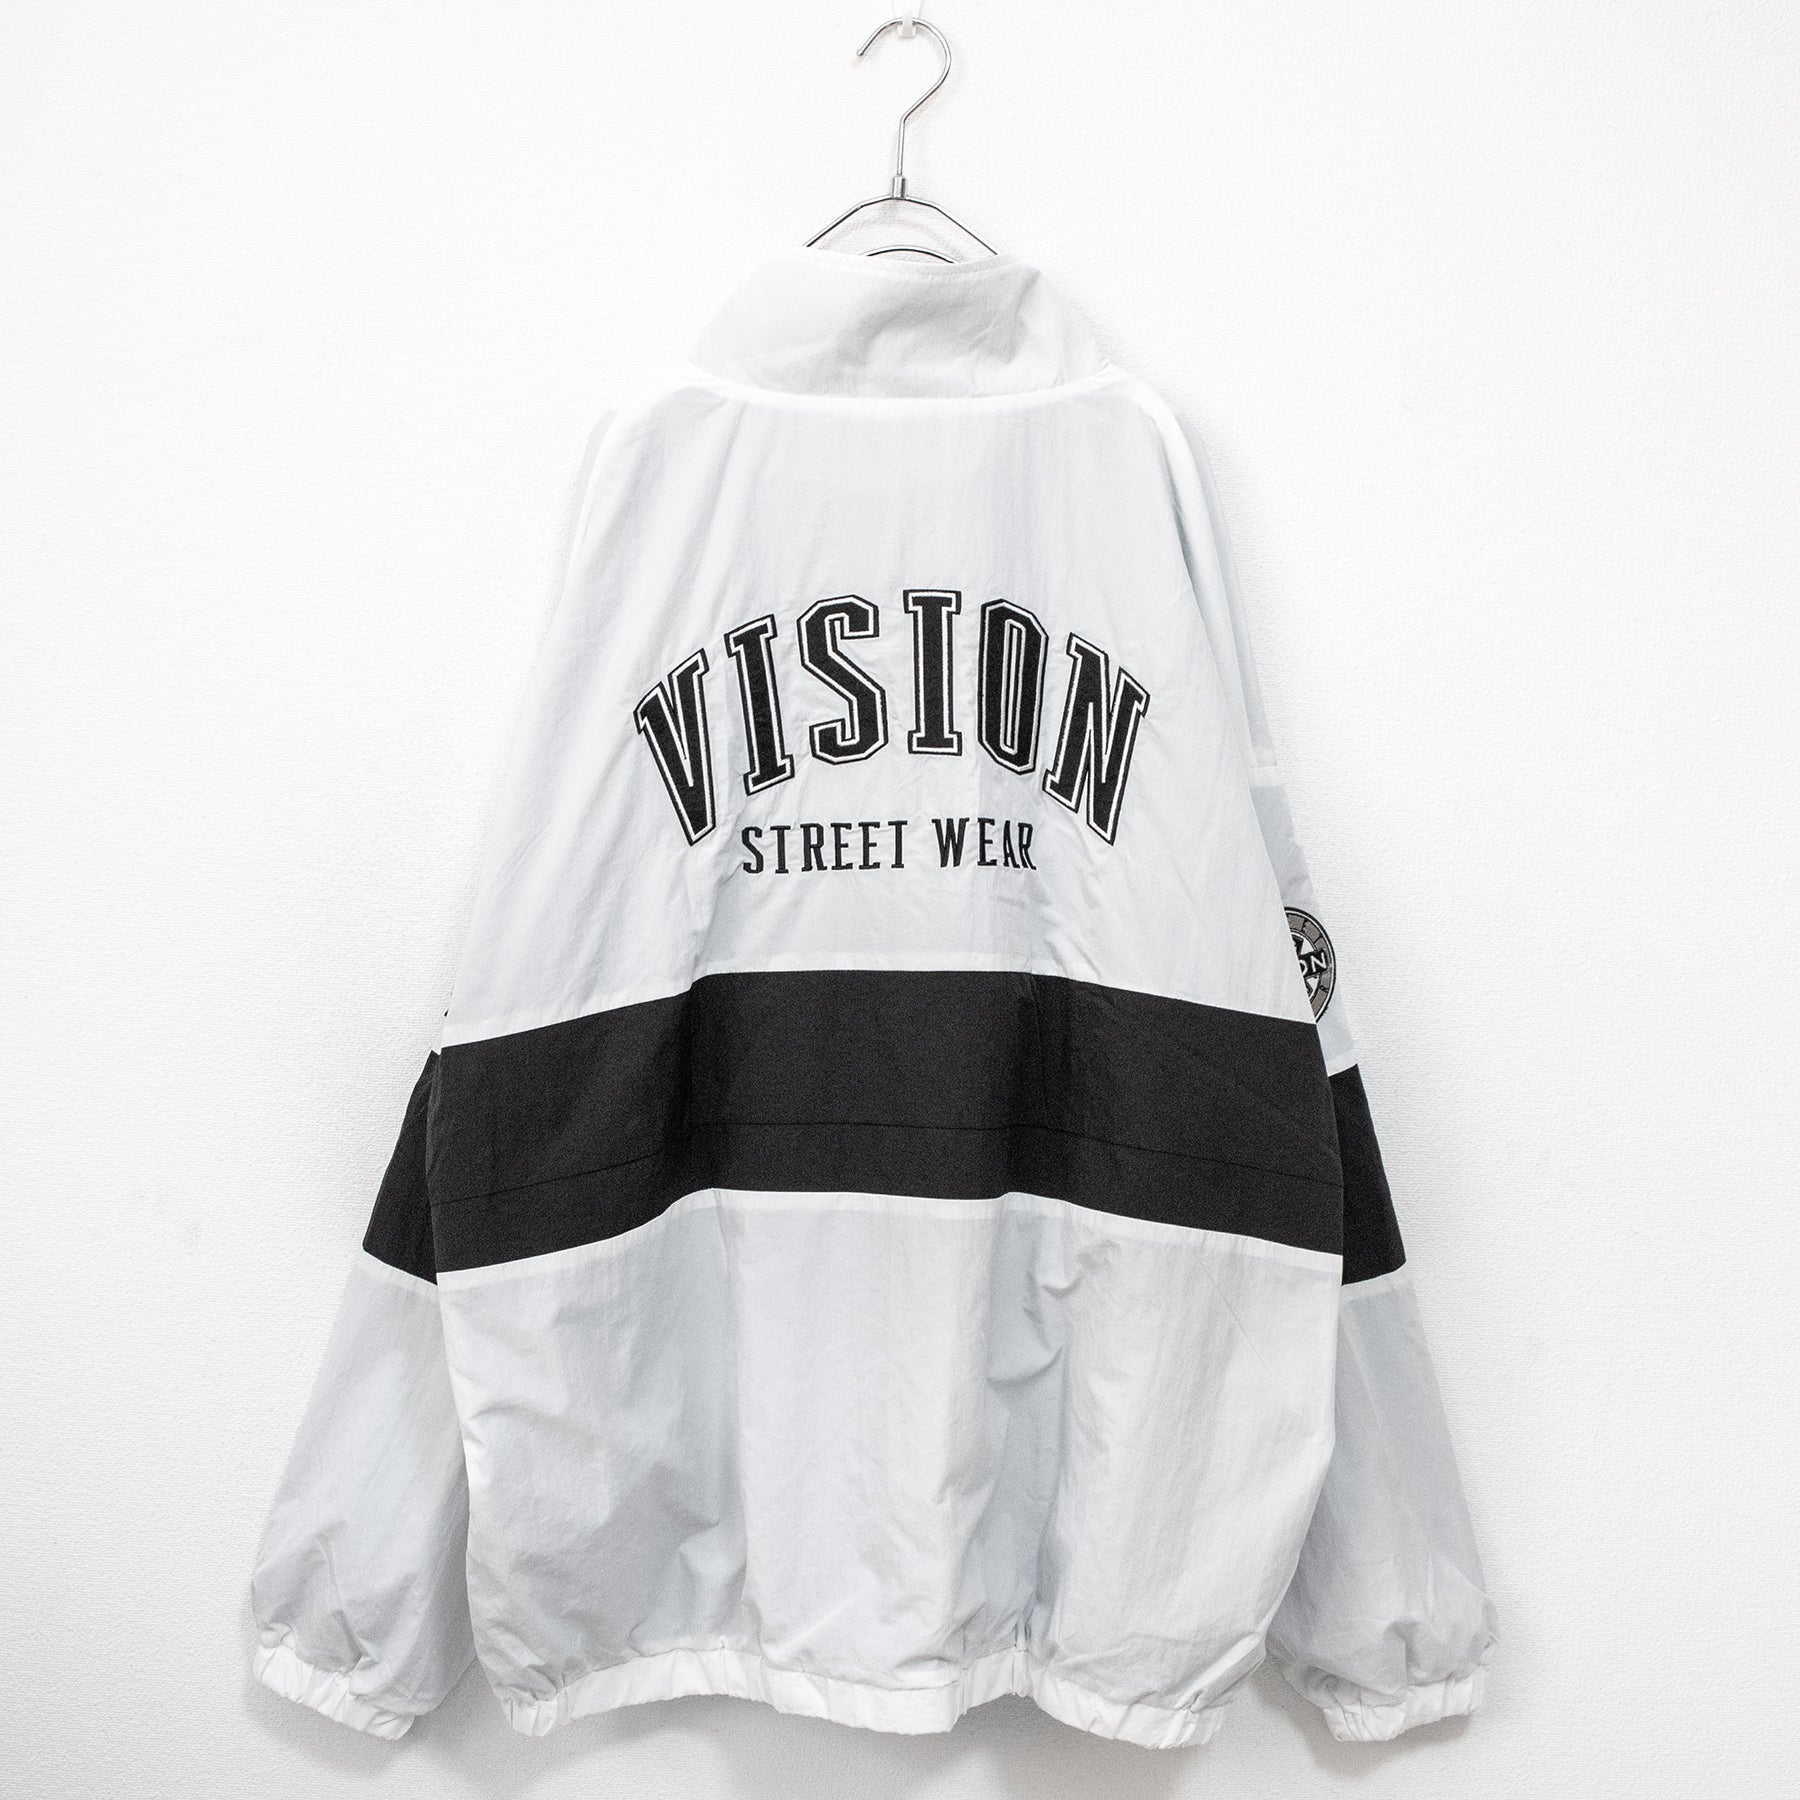 VISION STREET WEAR Vintage Nylon Patch Blouson Jacket - YOUAREMYPOISON